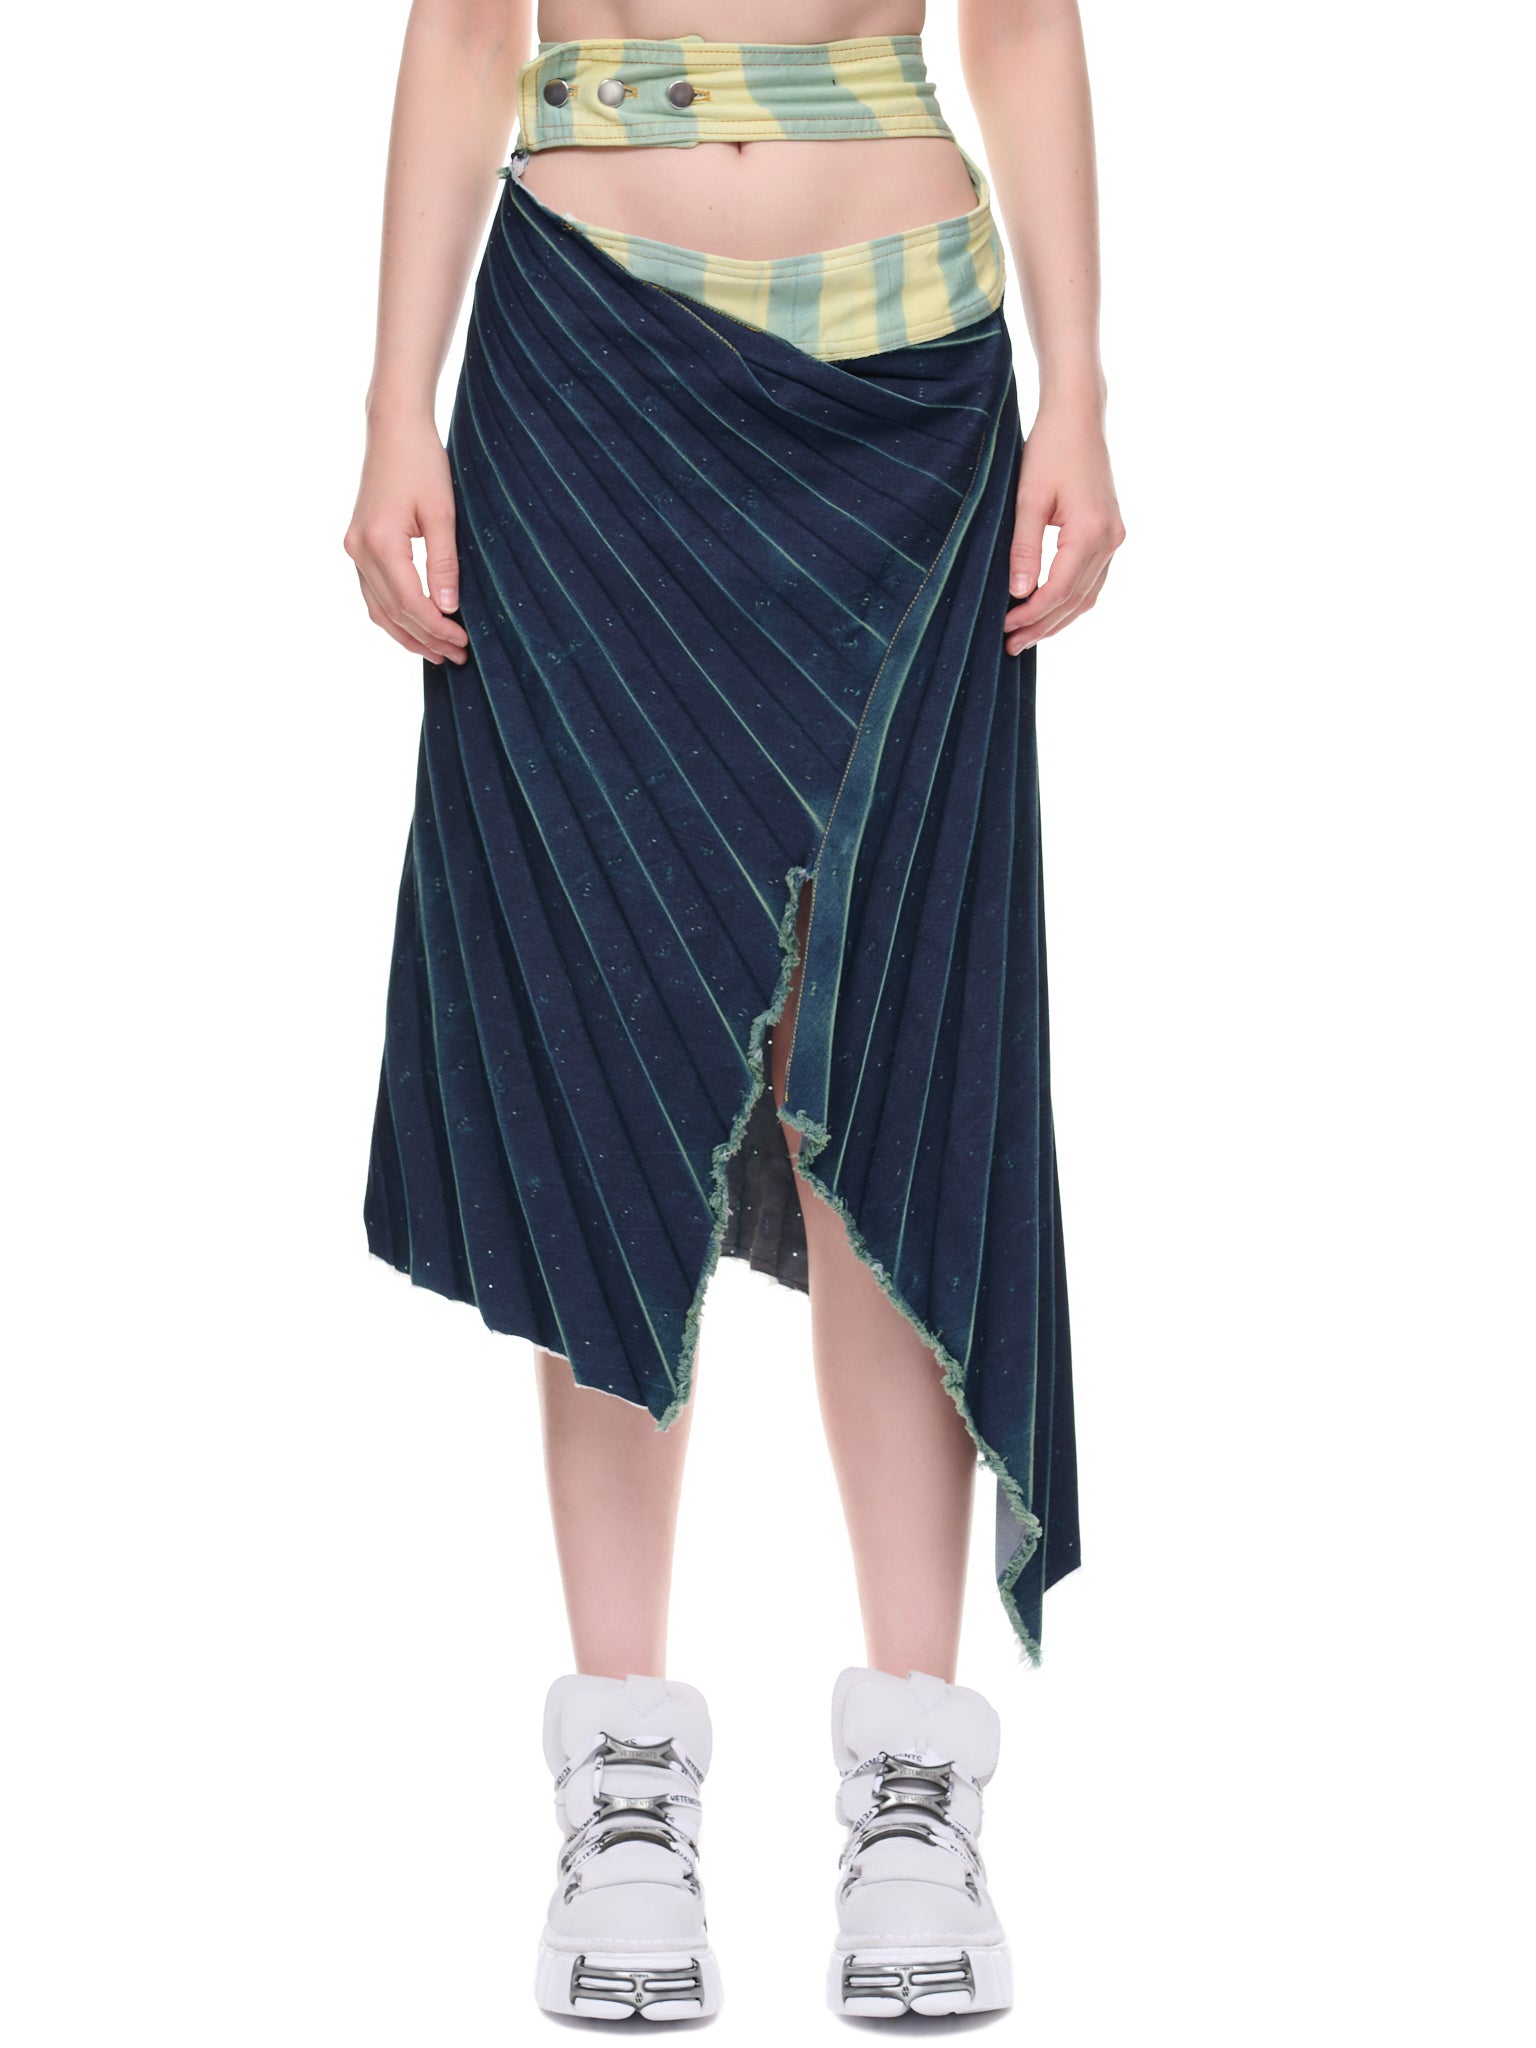 Pleated Denim Skirt (606JY-JADE-BLUE-DUSTY-YELLOW)